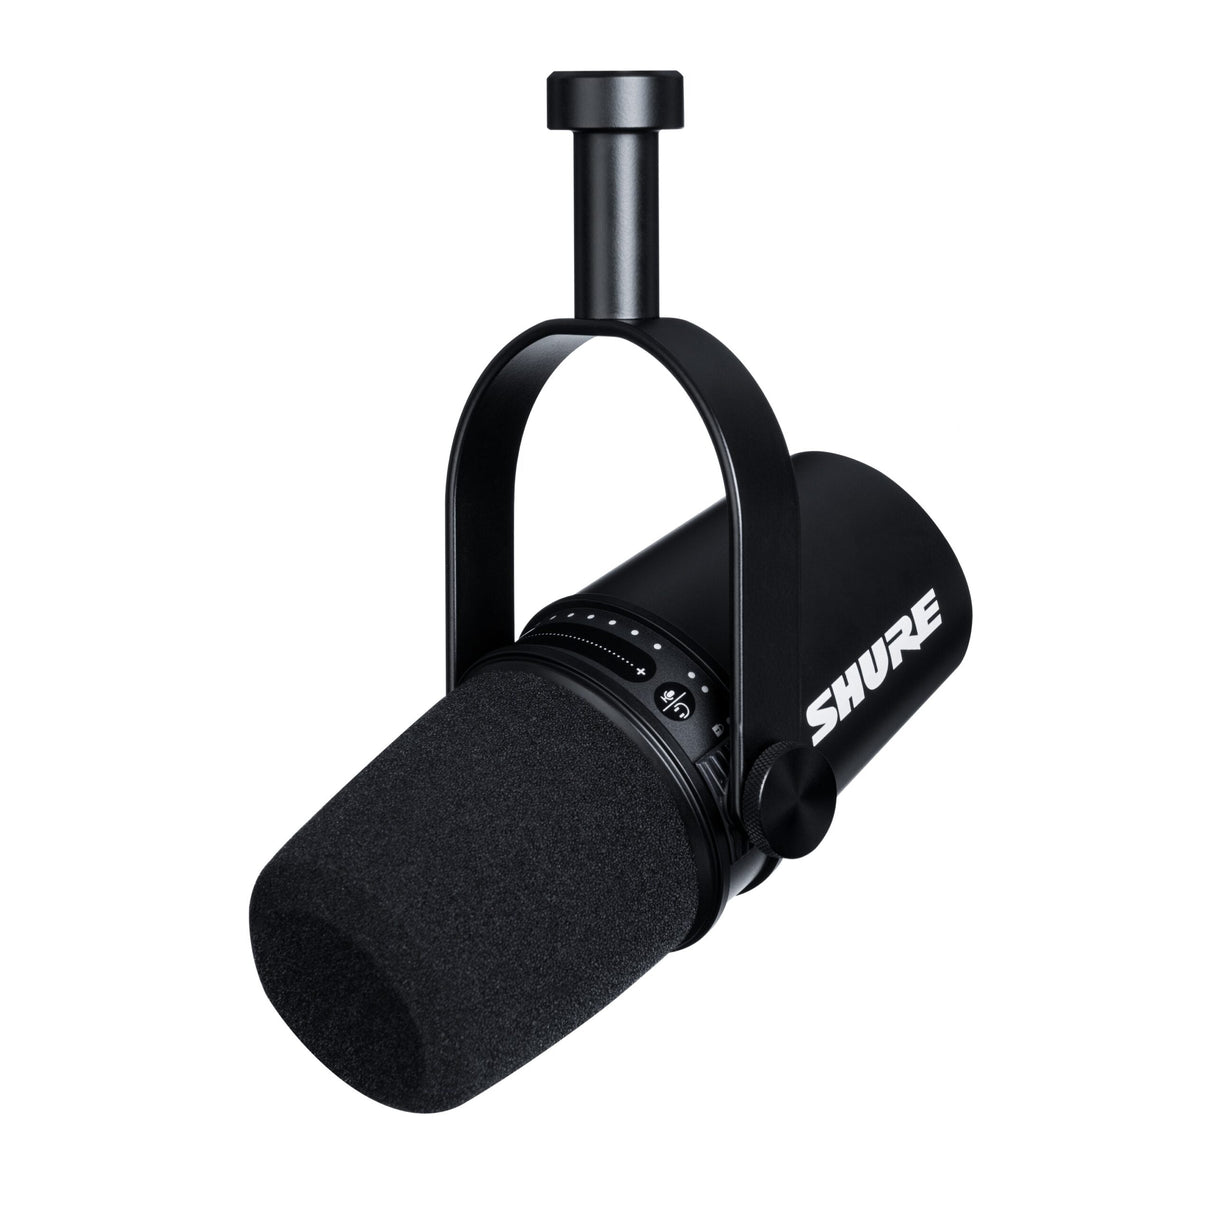 Shure MV7-K XLR/USB Dynamic Podcasting Microphone, Black (Used)